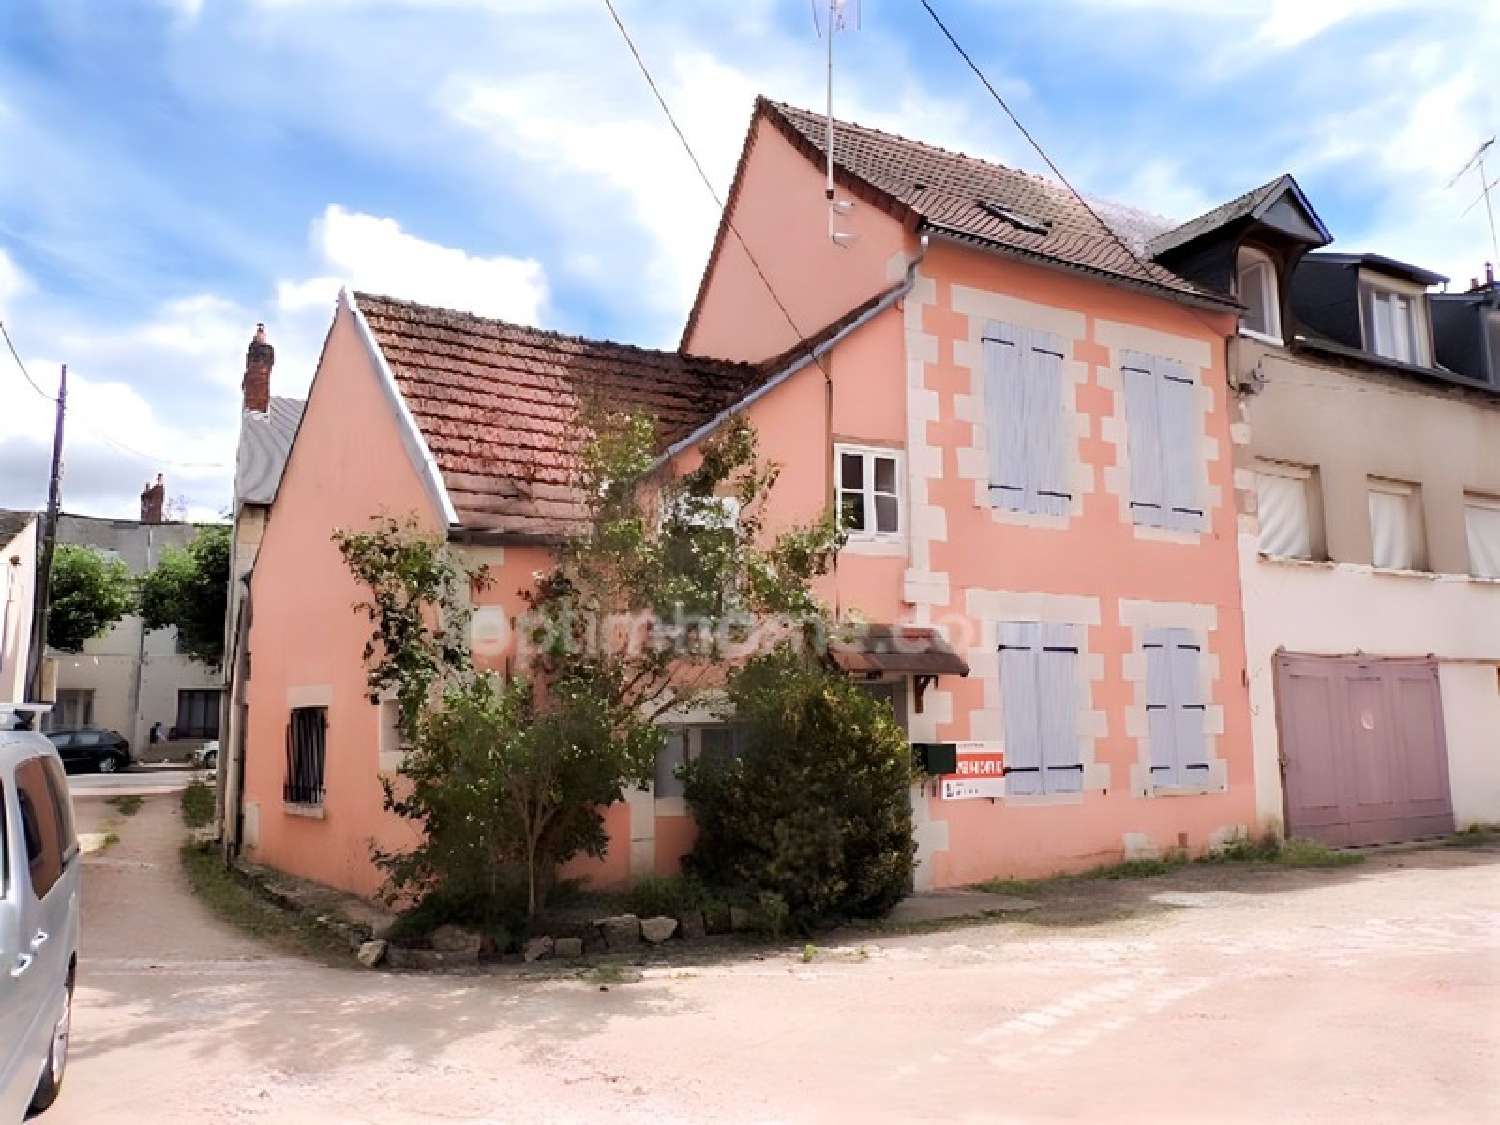  for sale city house Briare Loiret 1